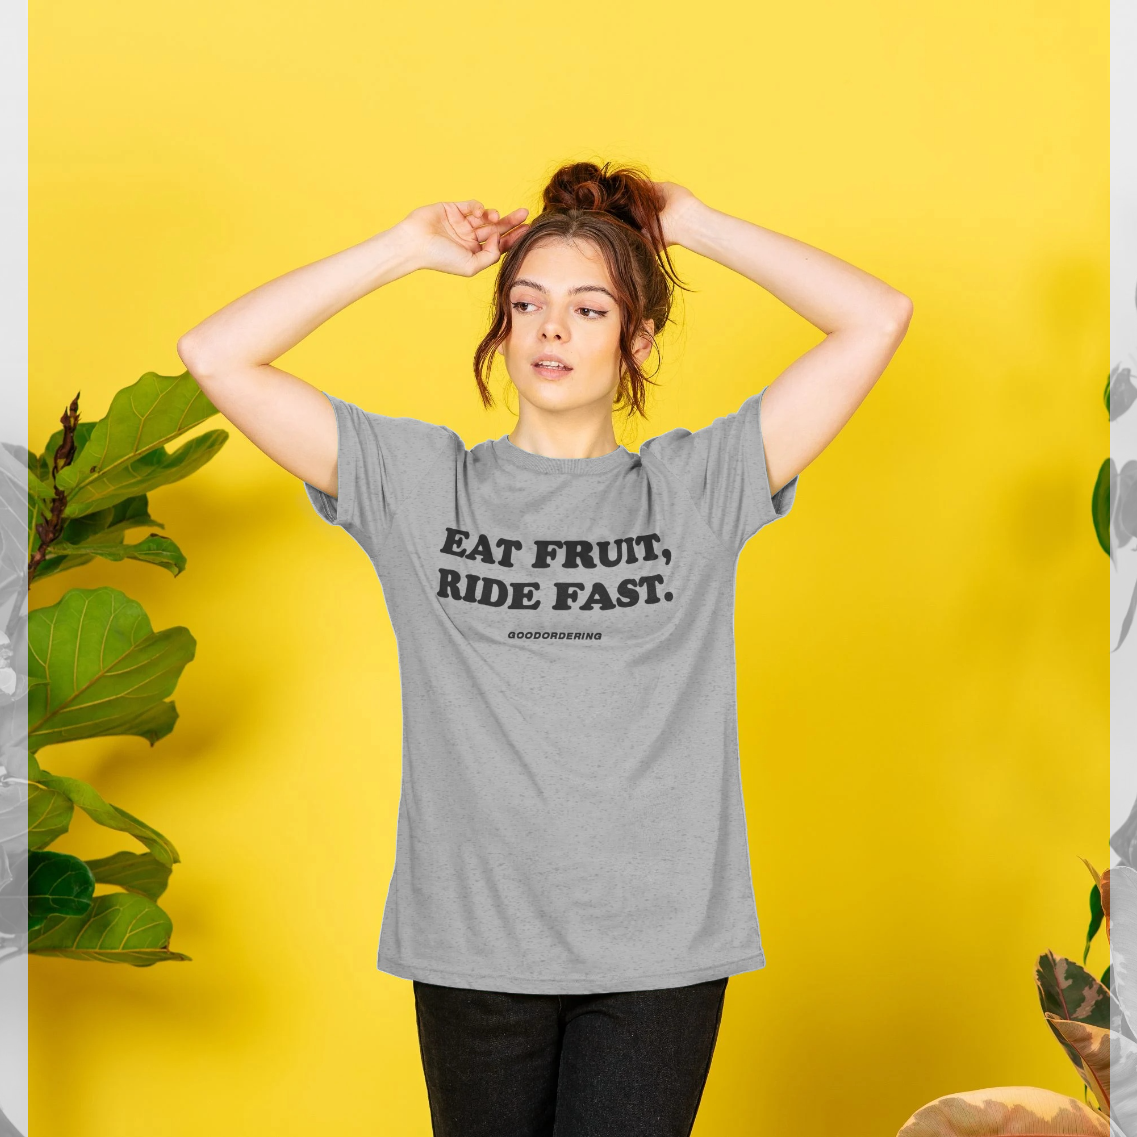 Eat Fruit, Ride Fast T-shirt Unisex